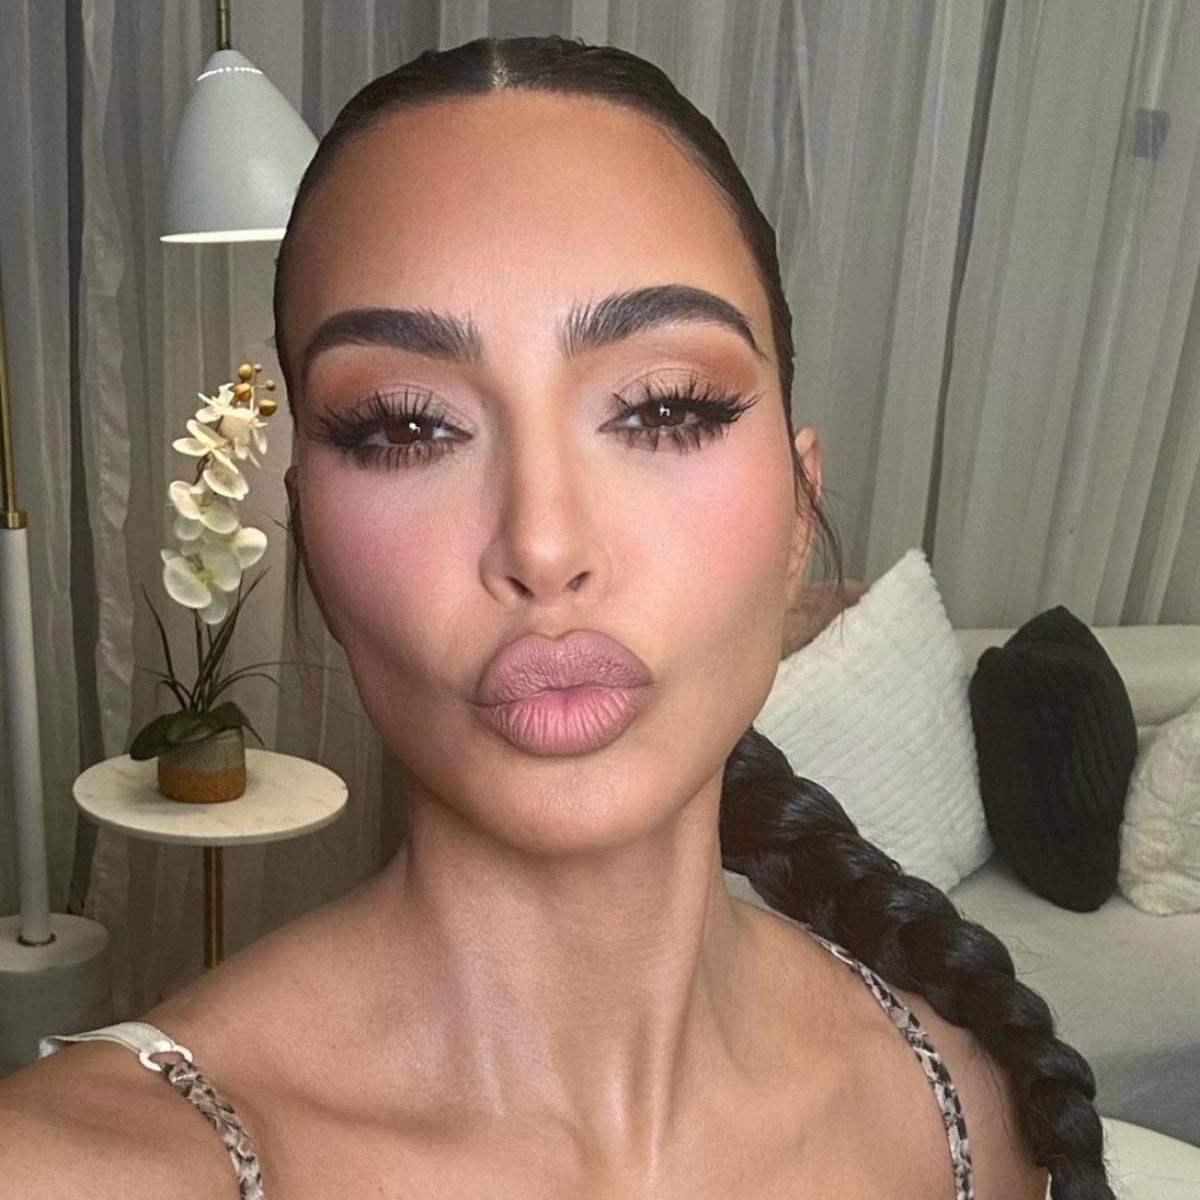 Is Kim Kardashian's Cryptic Louis Vuitton Instagram Post a Hint